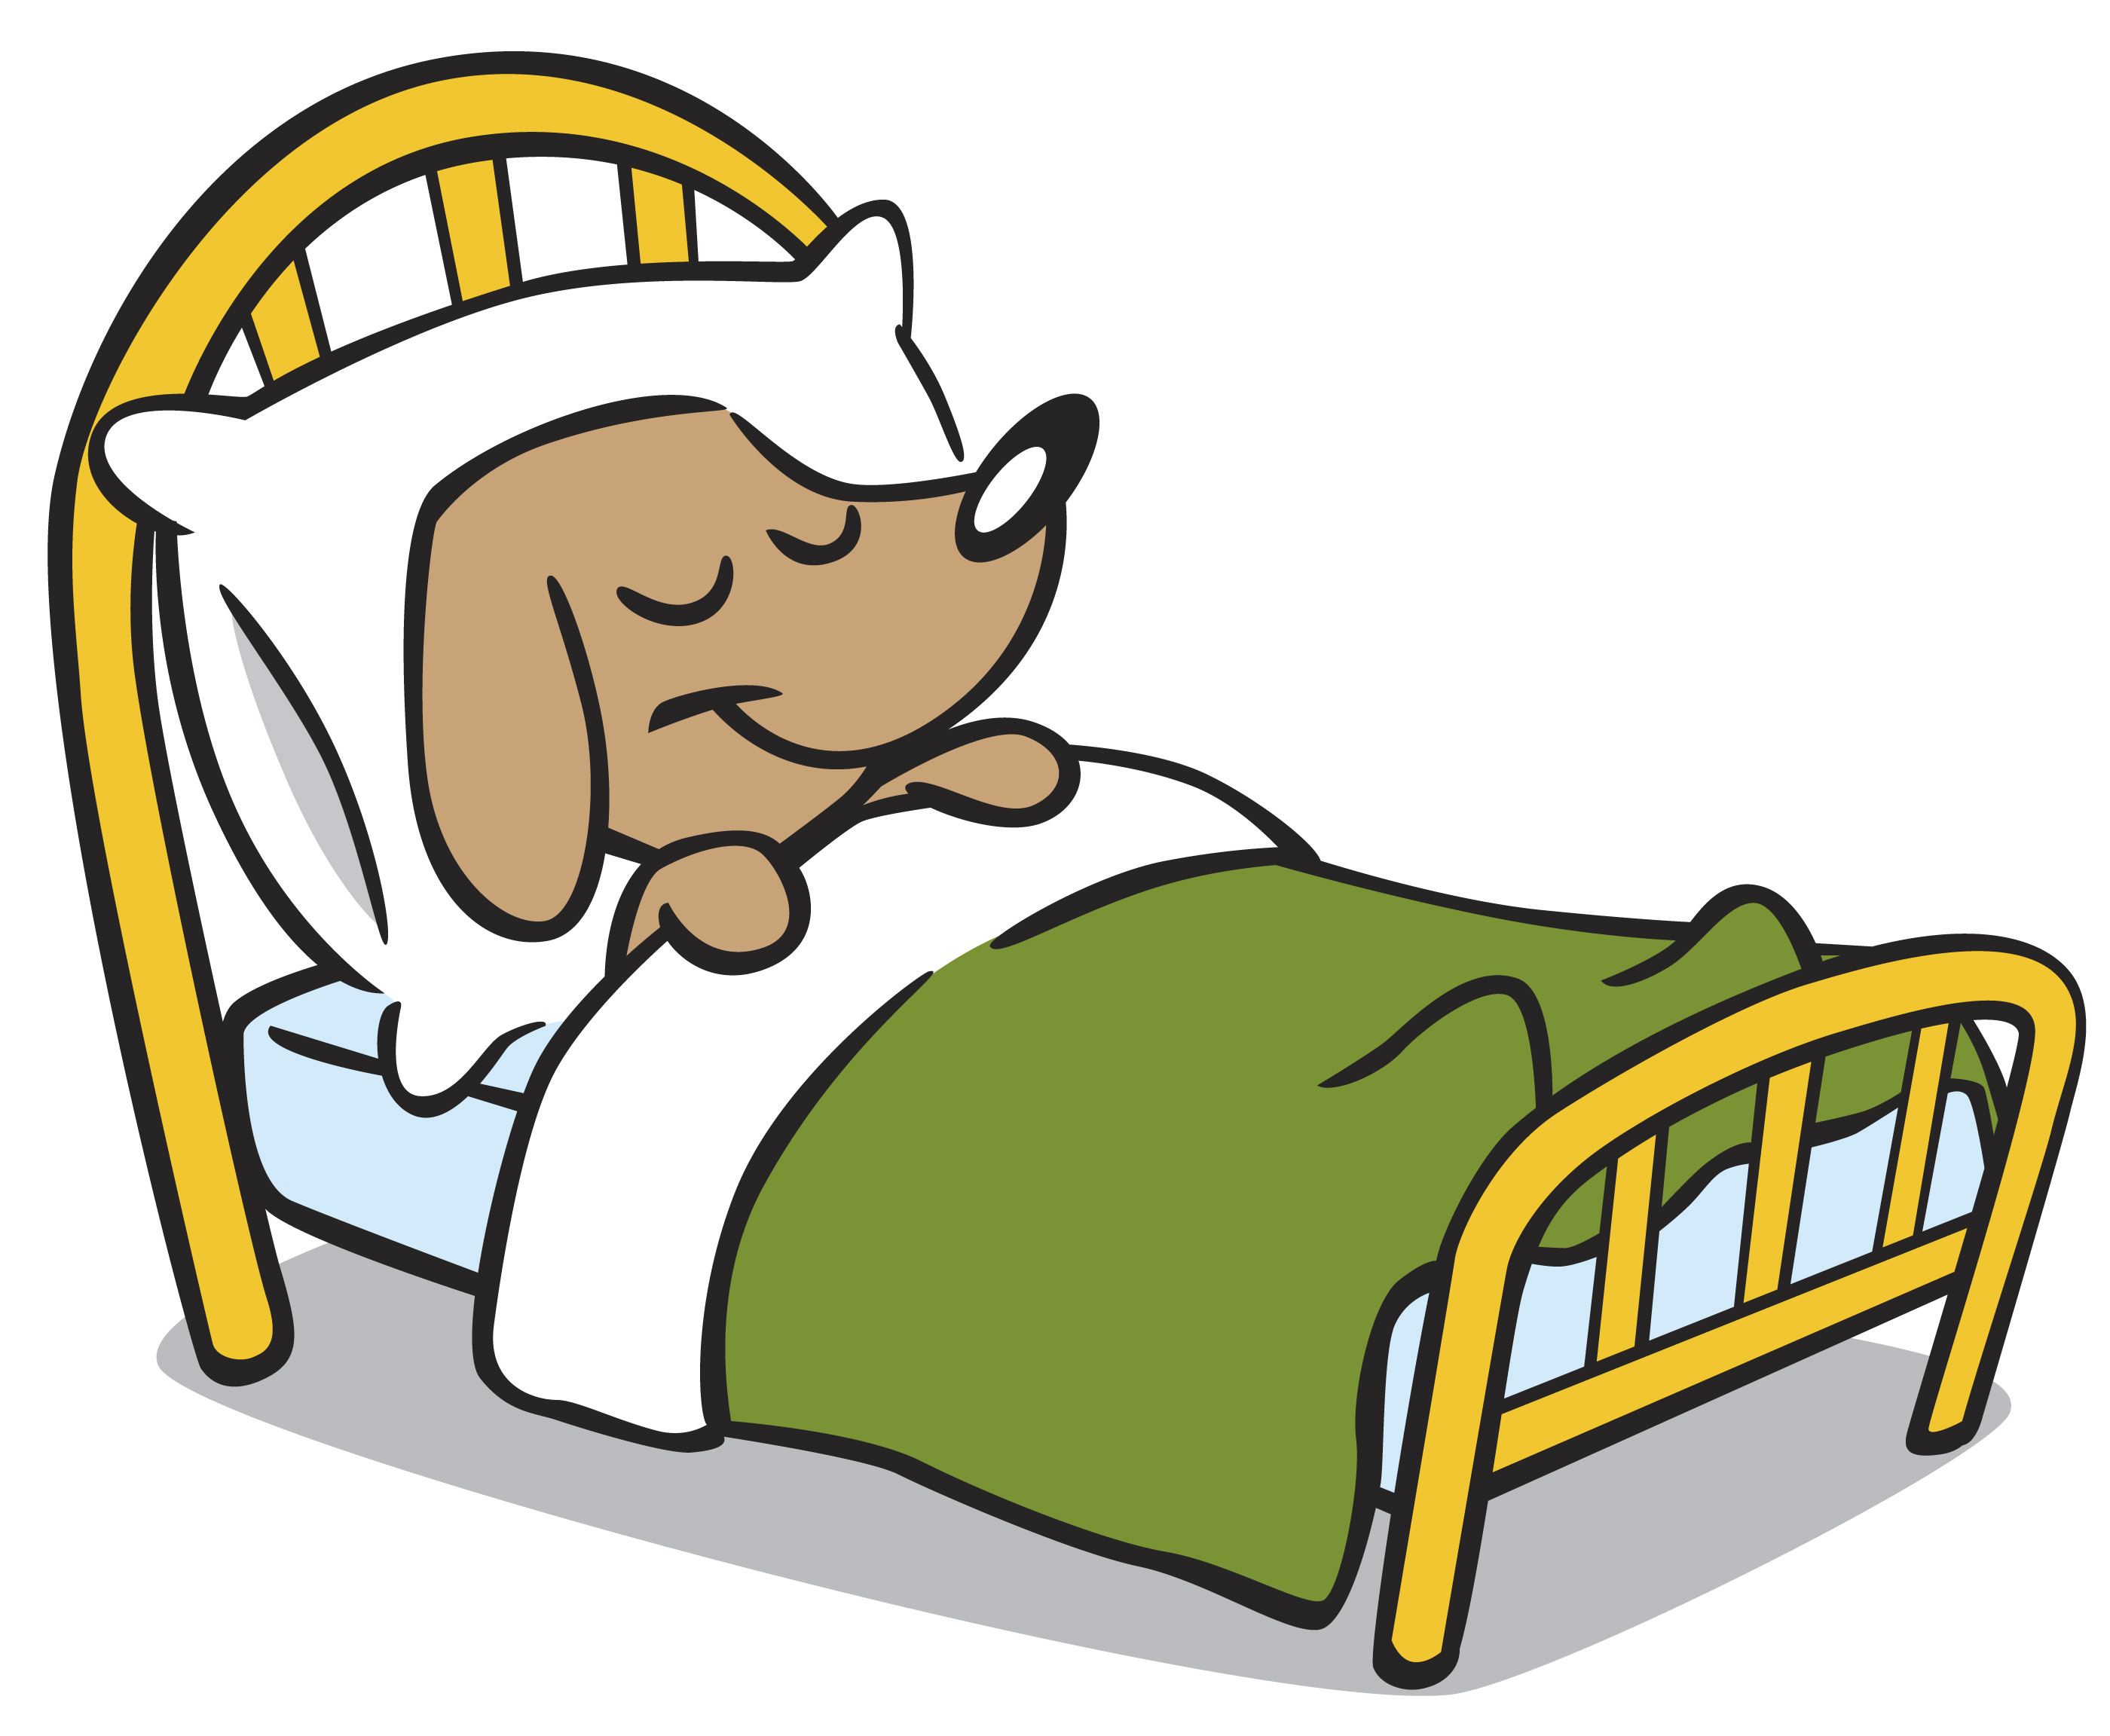 Clip art dog bed clipart clipart kid